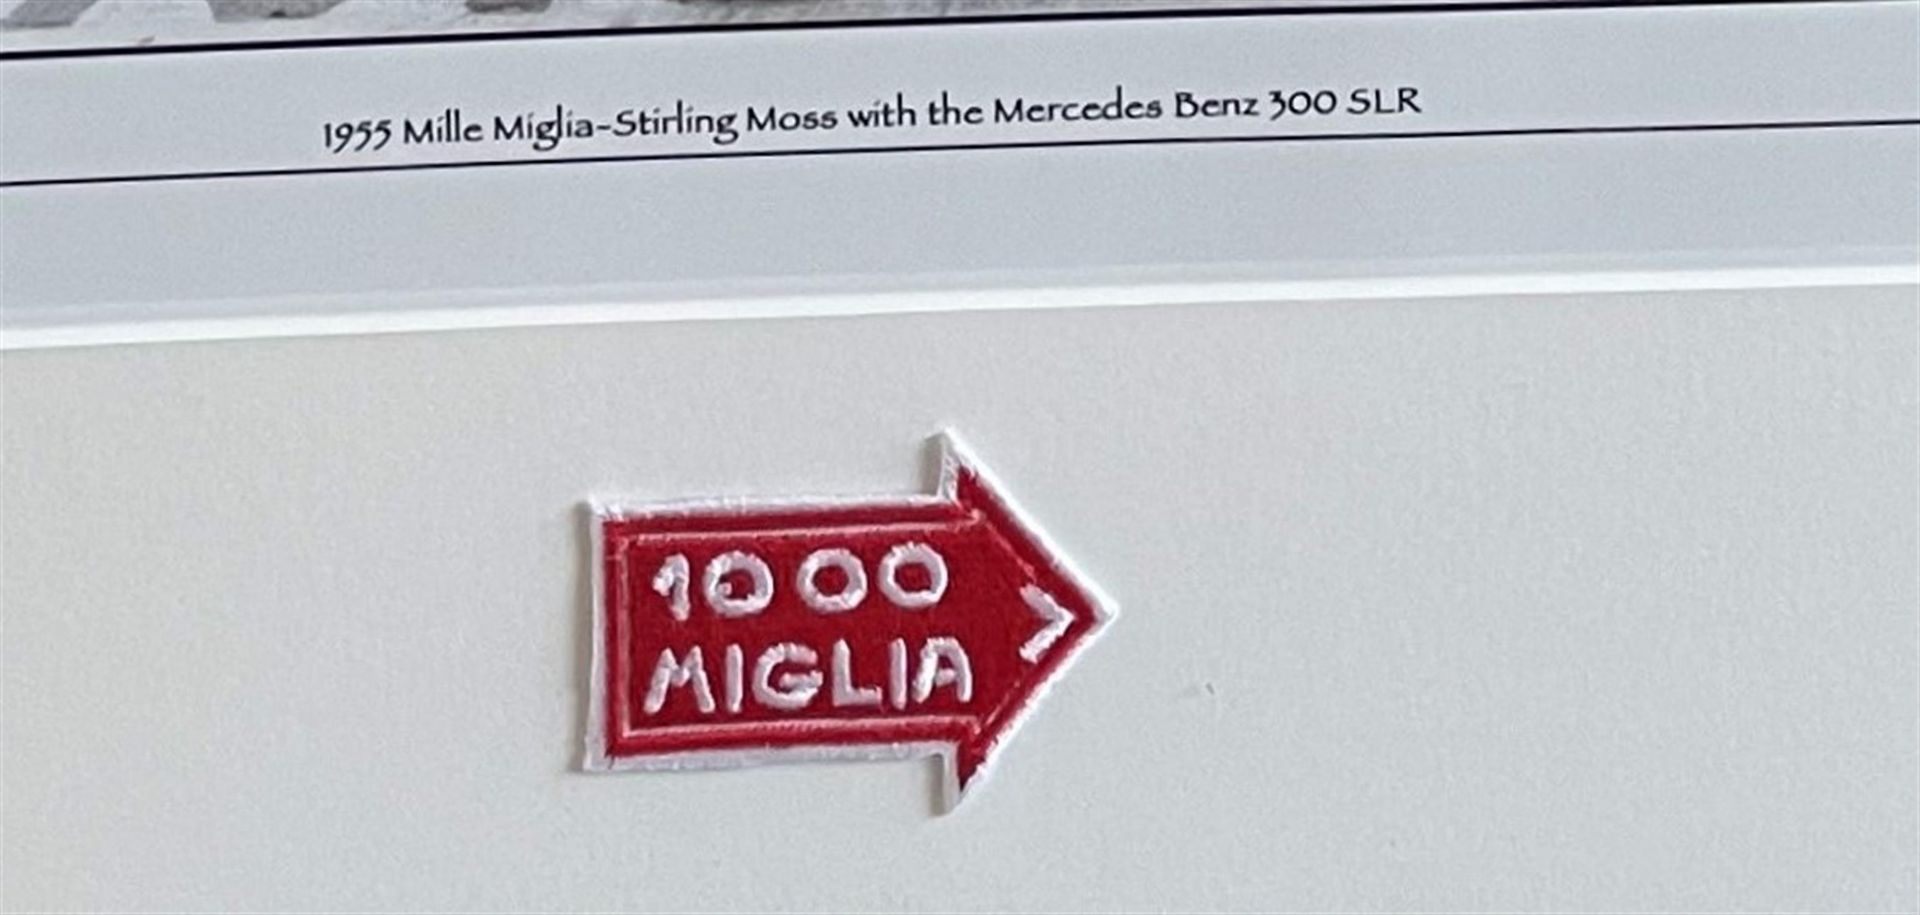 Stirling Moss Signed 1955 Mille Miglia Framed Photo - Image 4 of 4